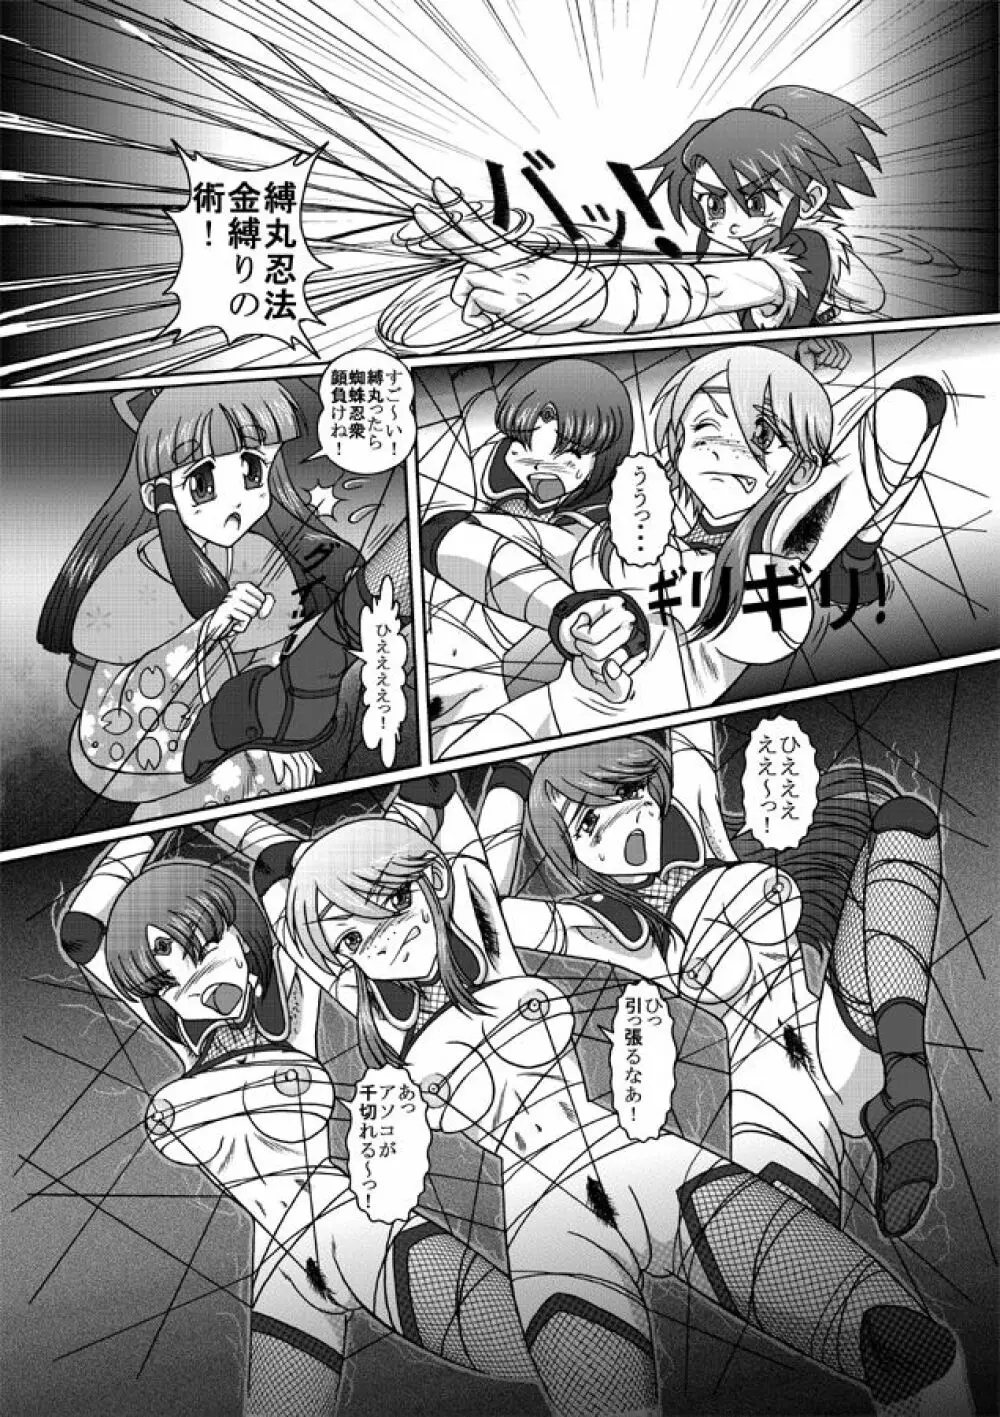 Same-themed manga about kid fighting female ninjas from japanese imageboard. 27ページ